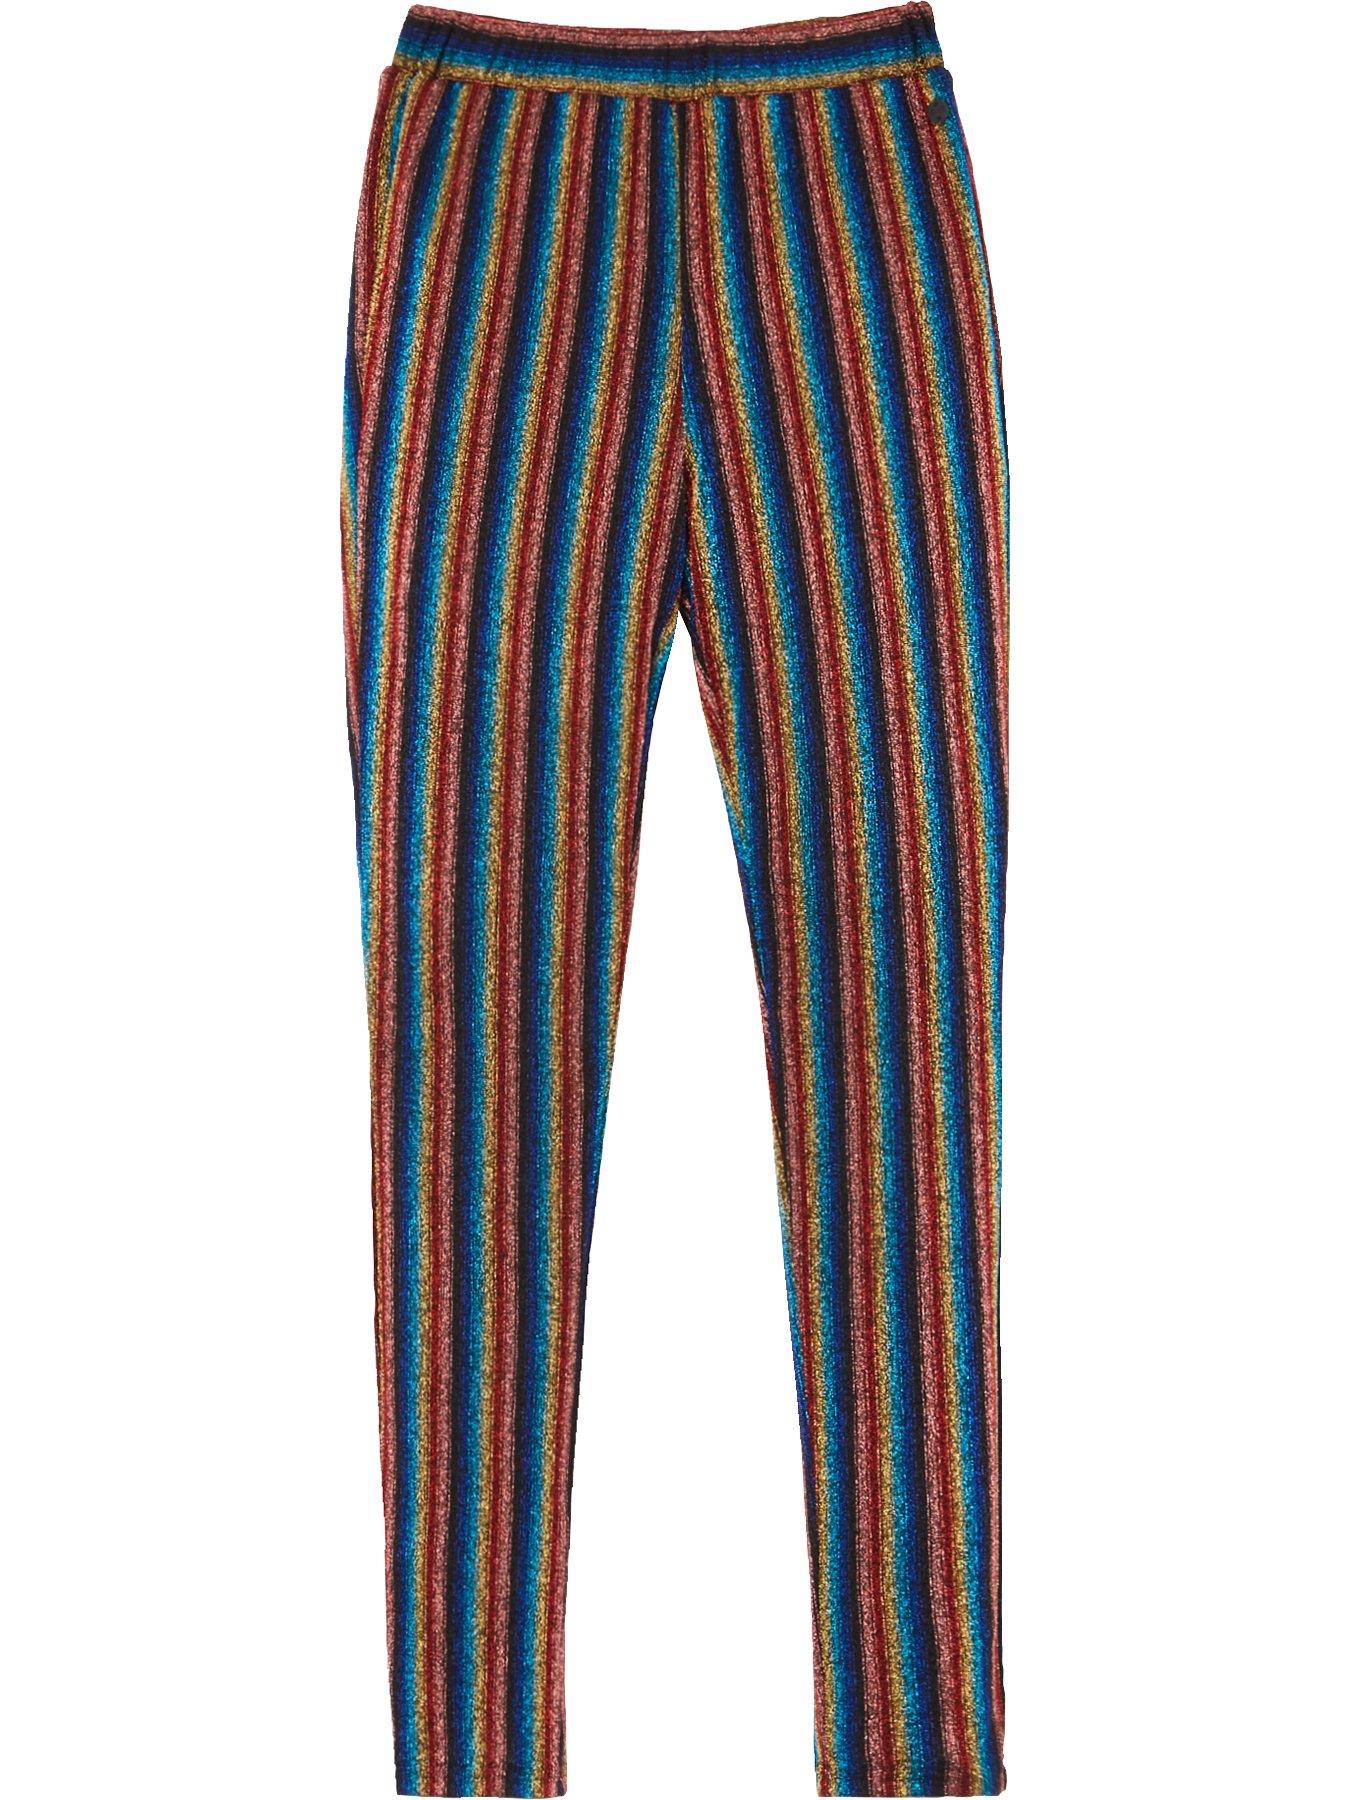  Kids Lucia Sparkle Striped Co-ord Trousers - Multi